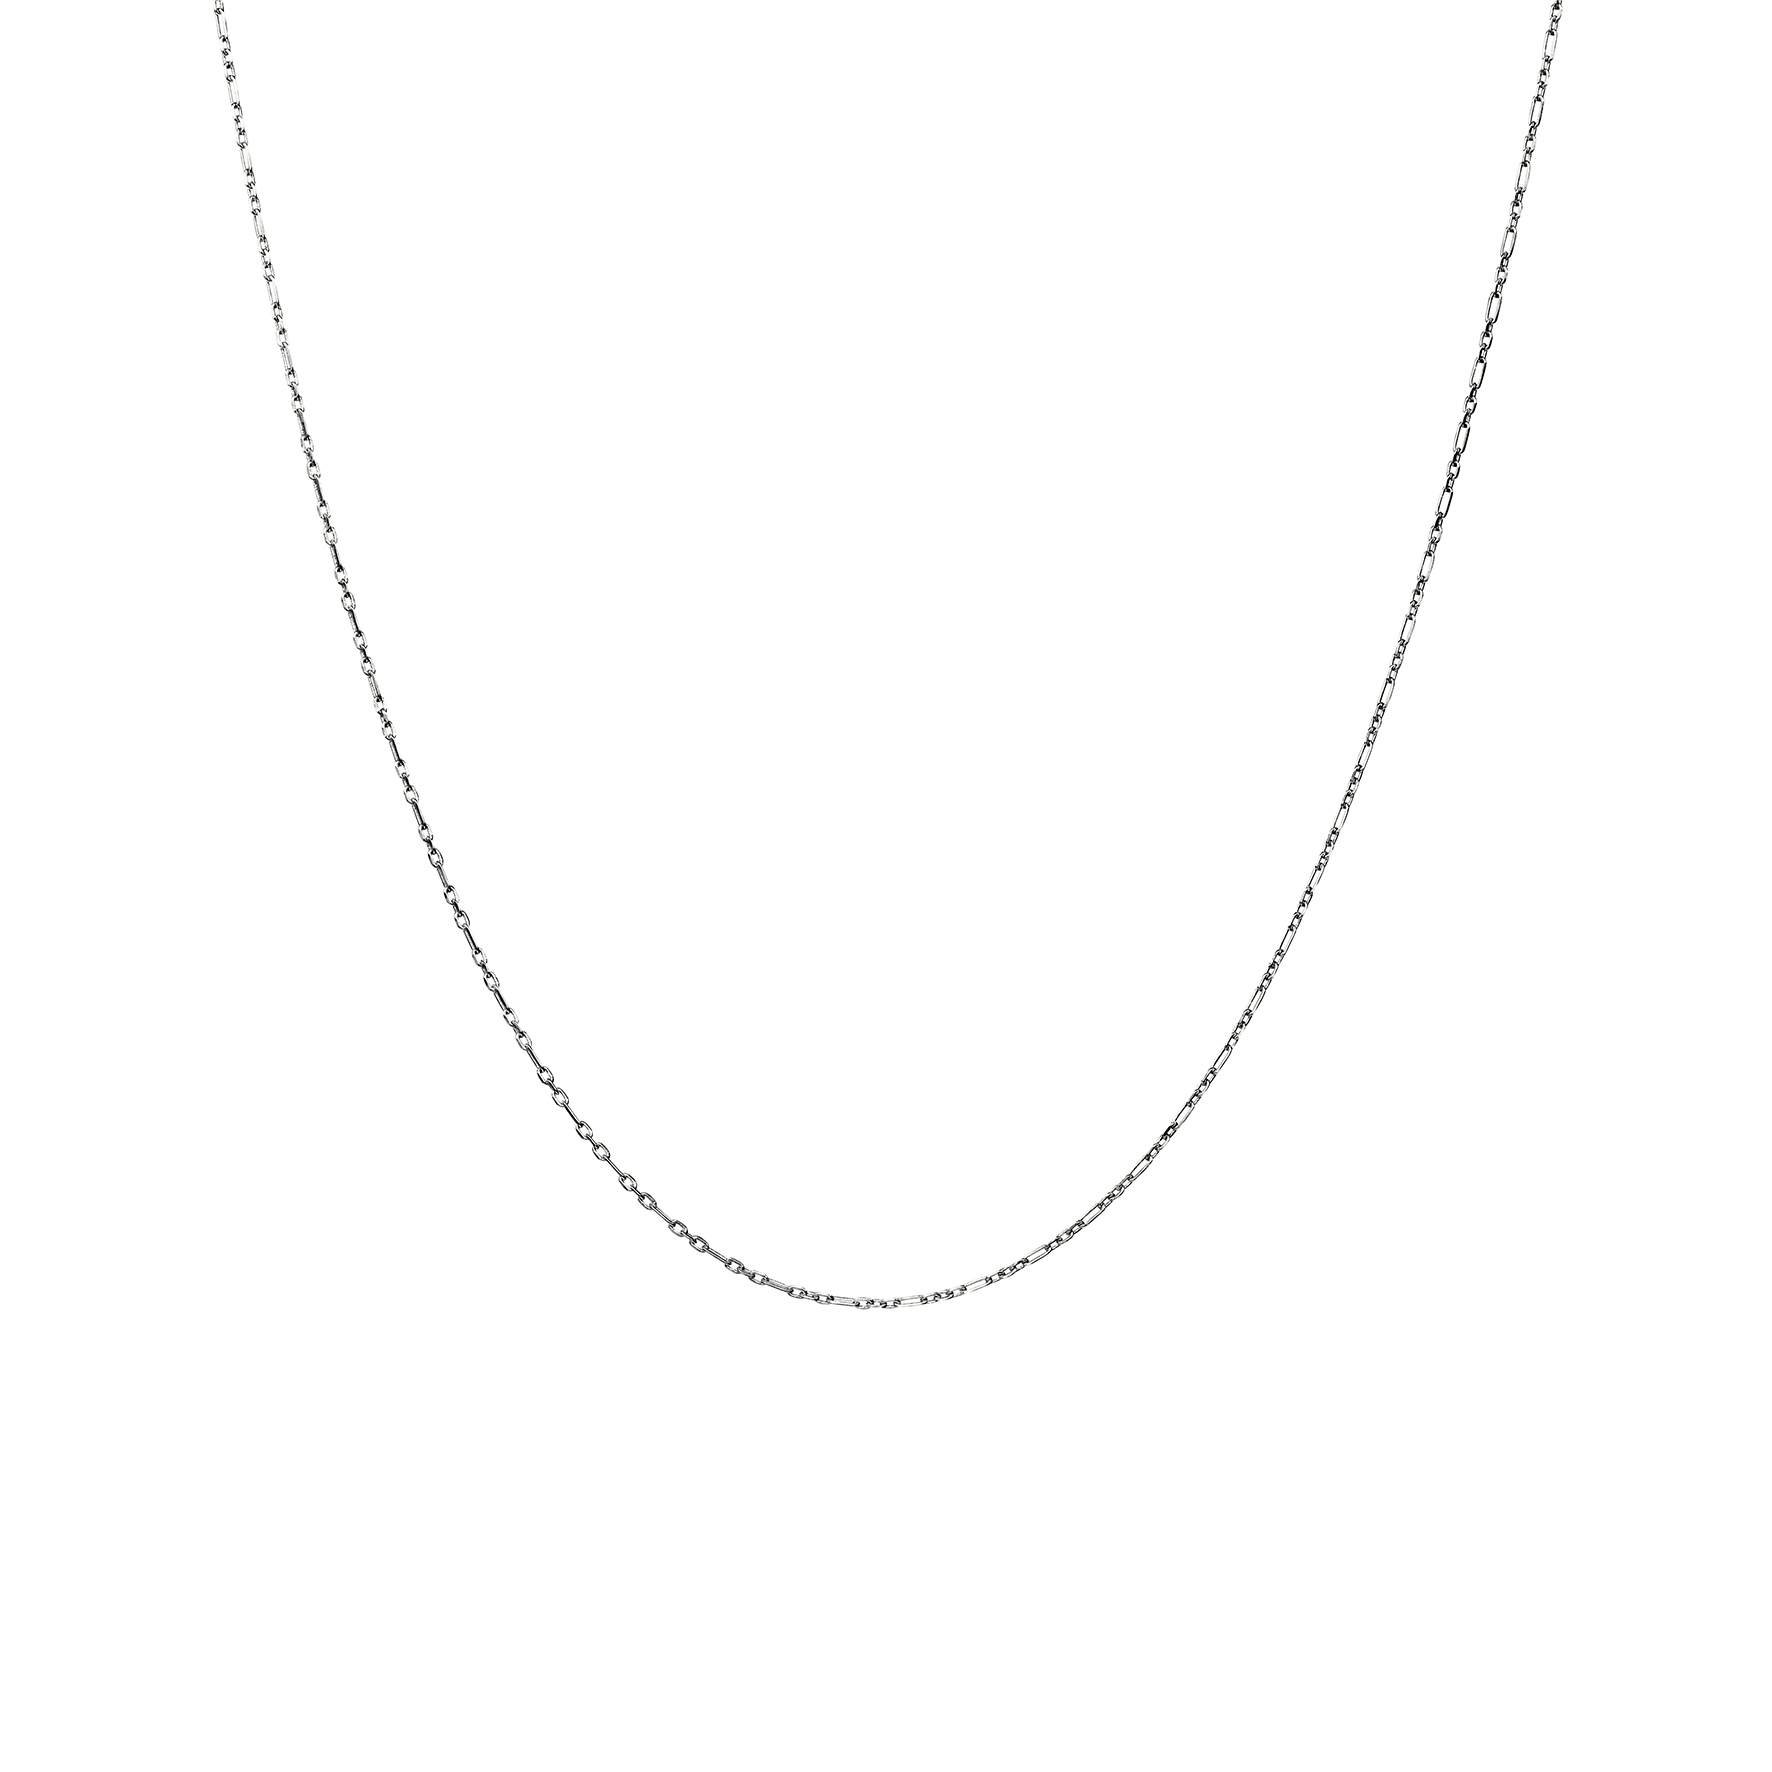 Kris Medium Necklace from Maanesten in Silver Sterling 925